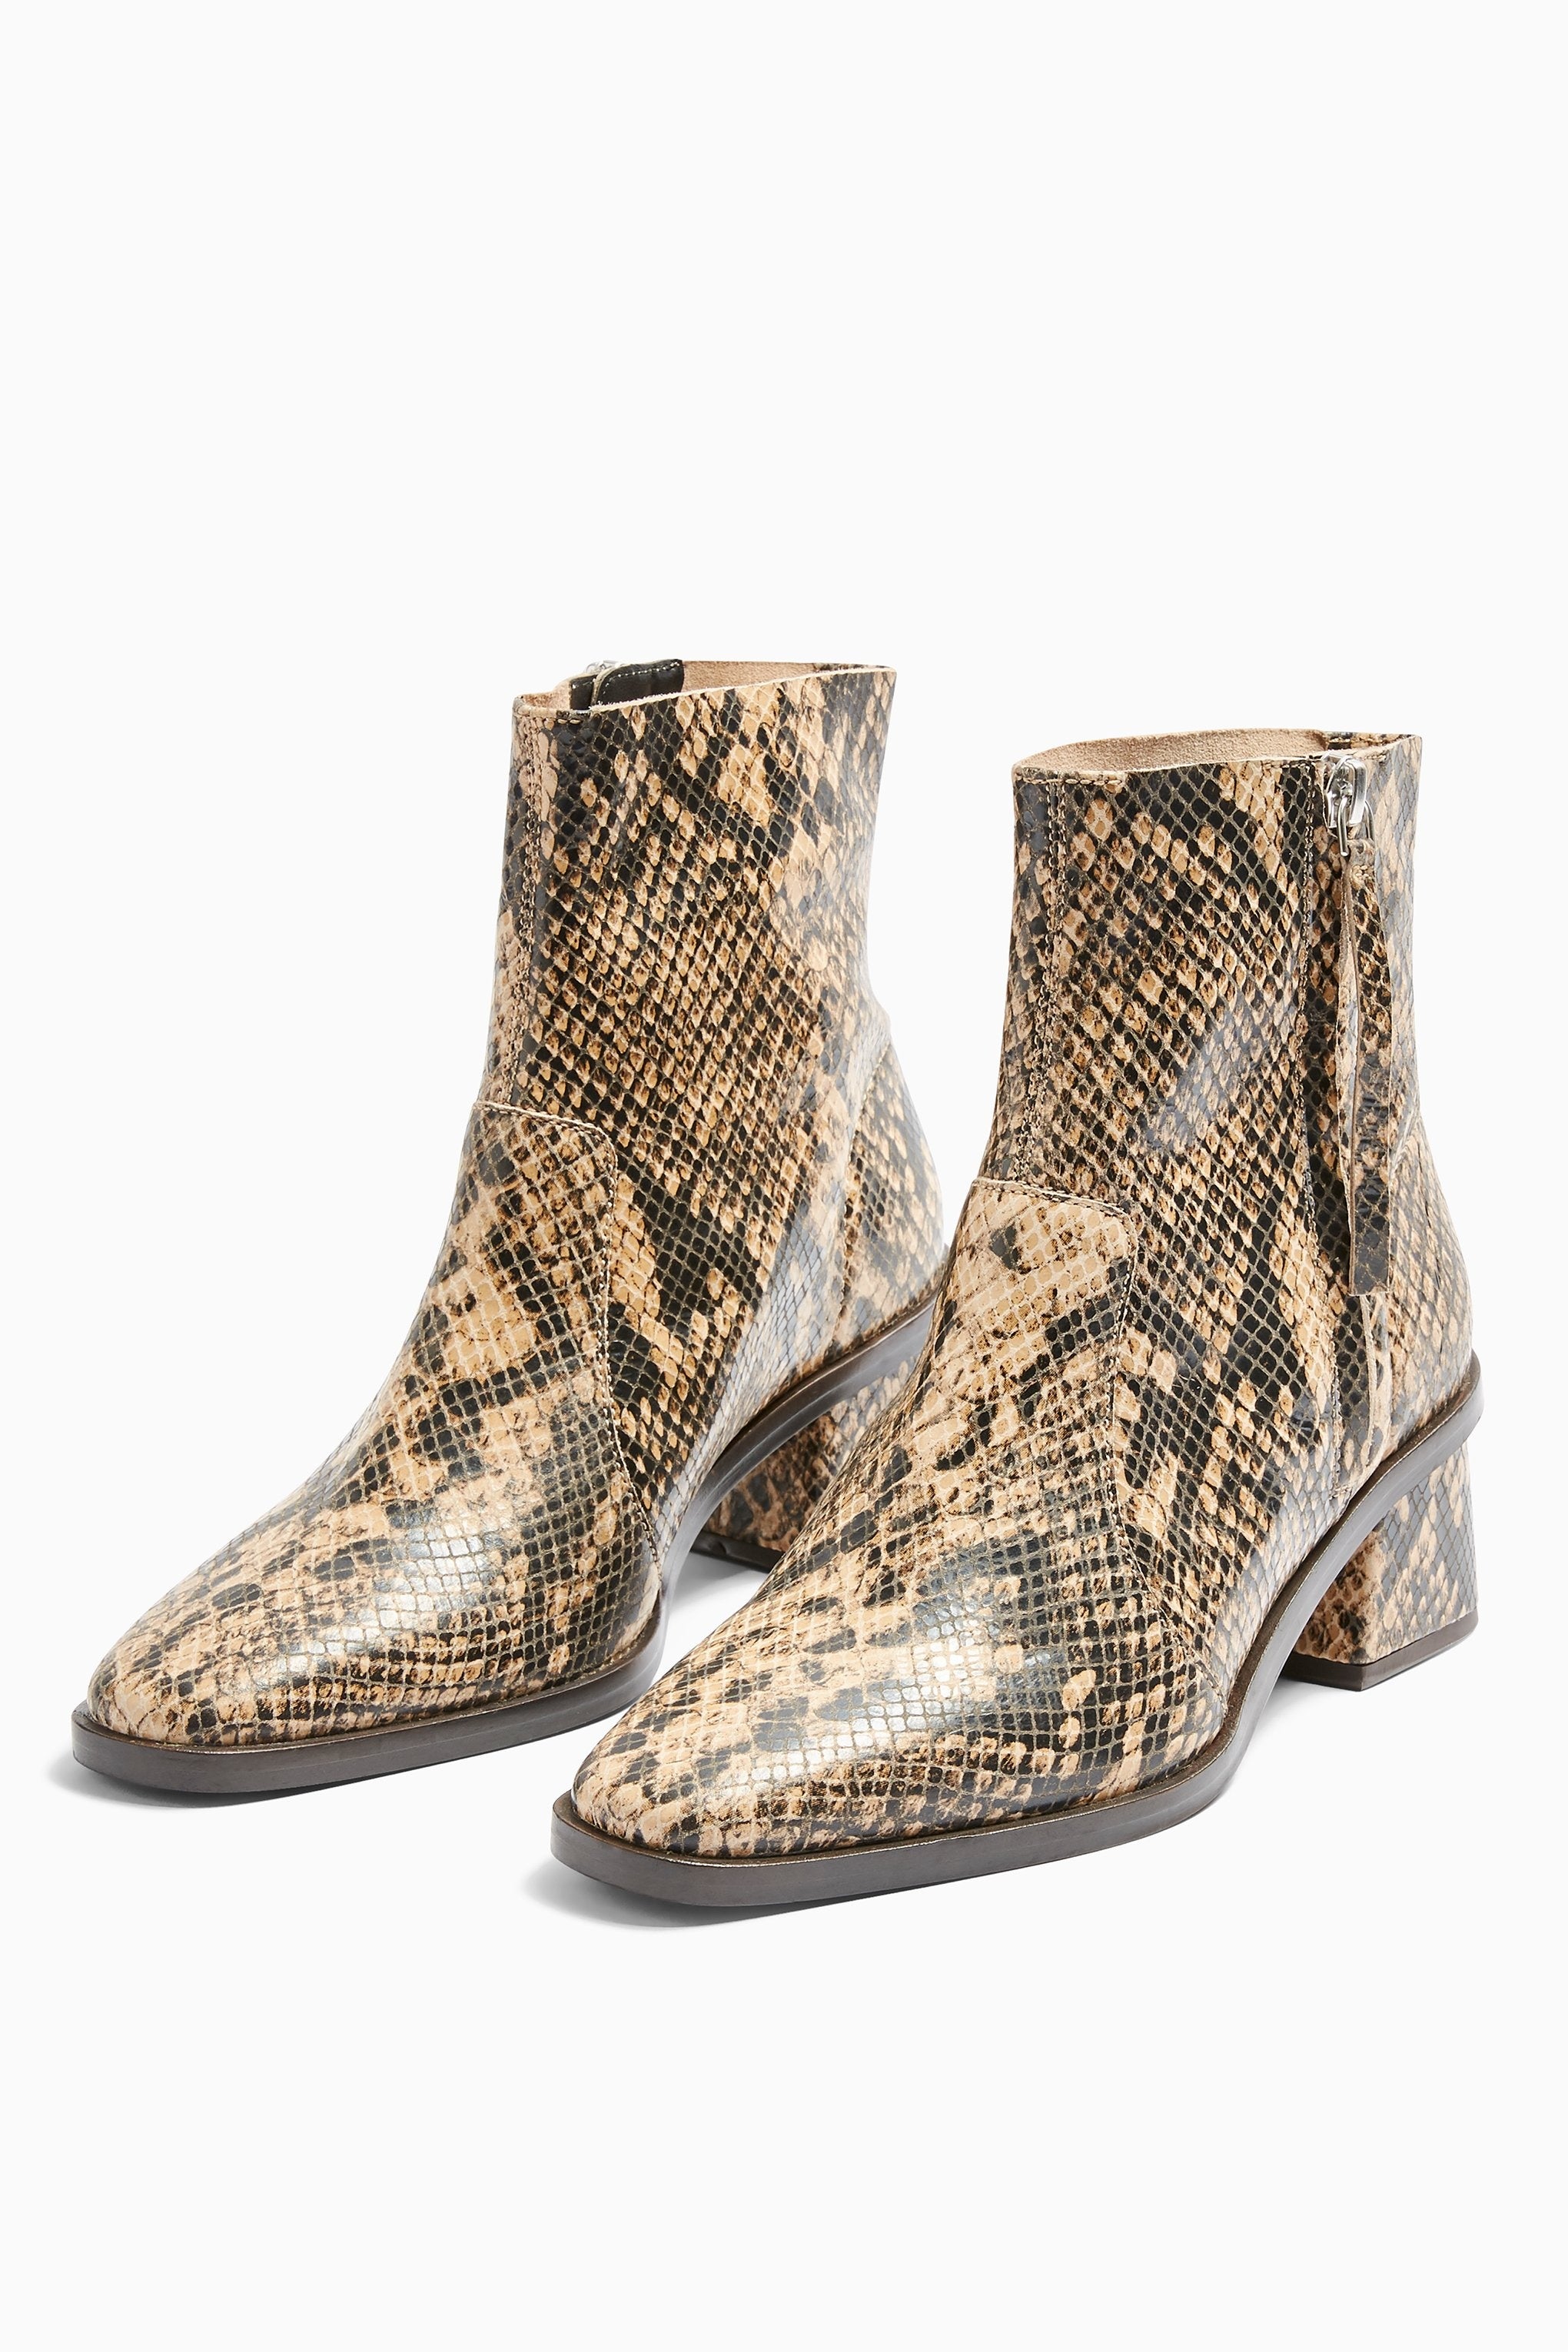 top shop snake skin boots